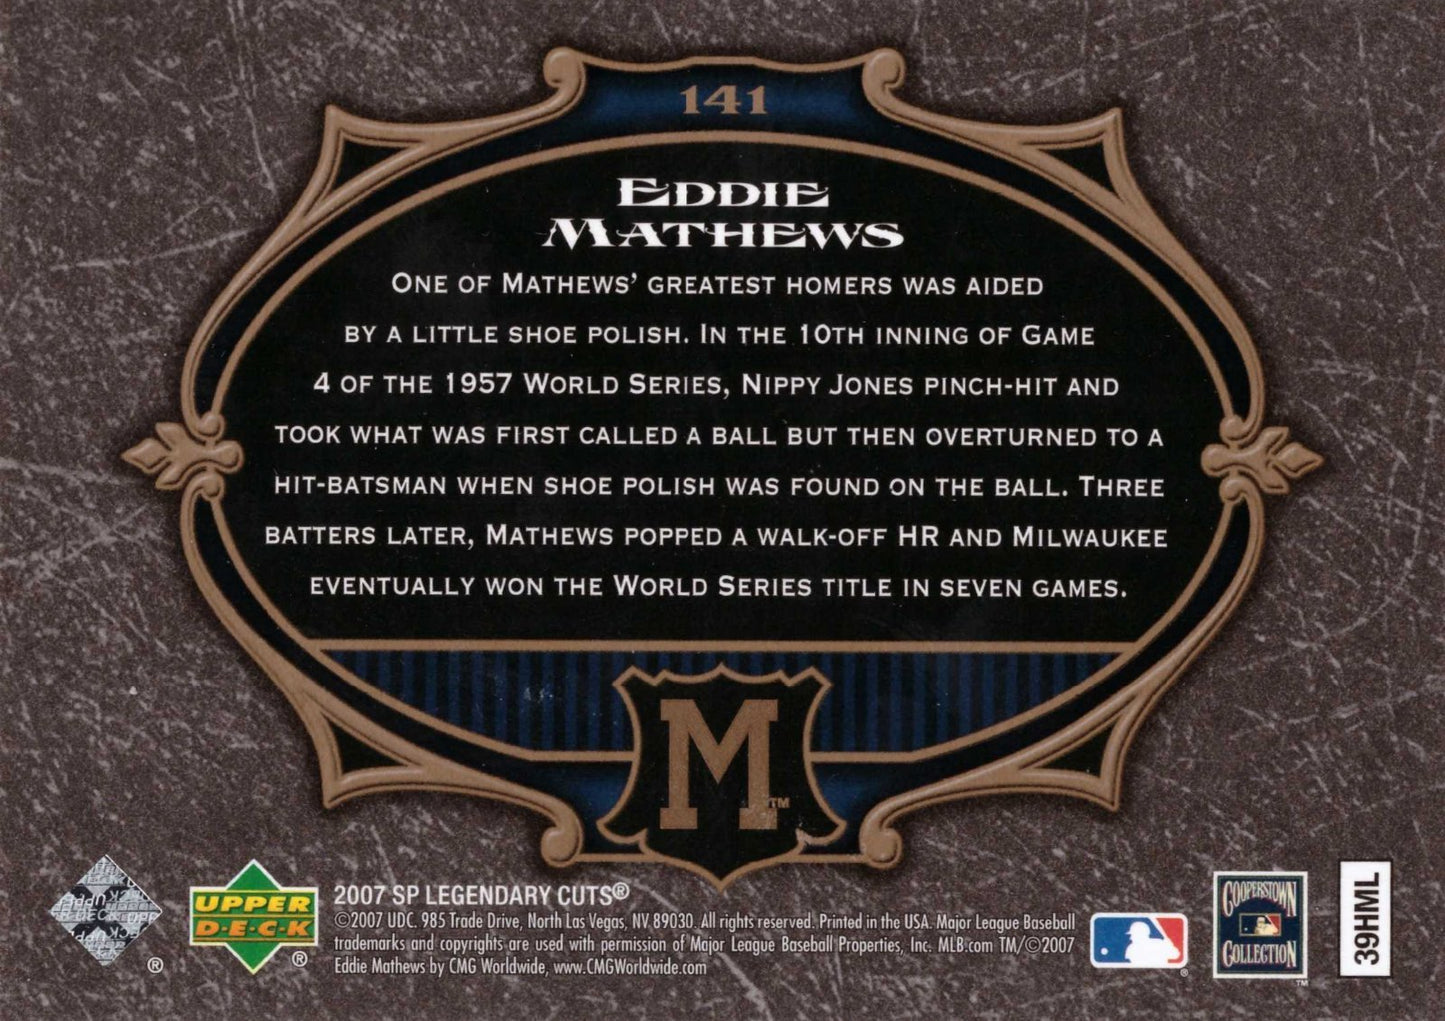 2007 SP Legendary Cuts #141 Eddie Mathews /550 Legendary Lineage